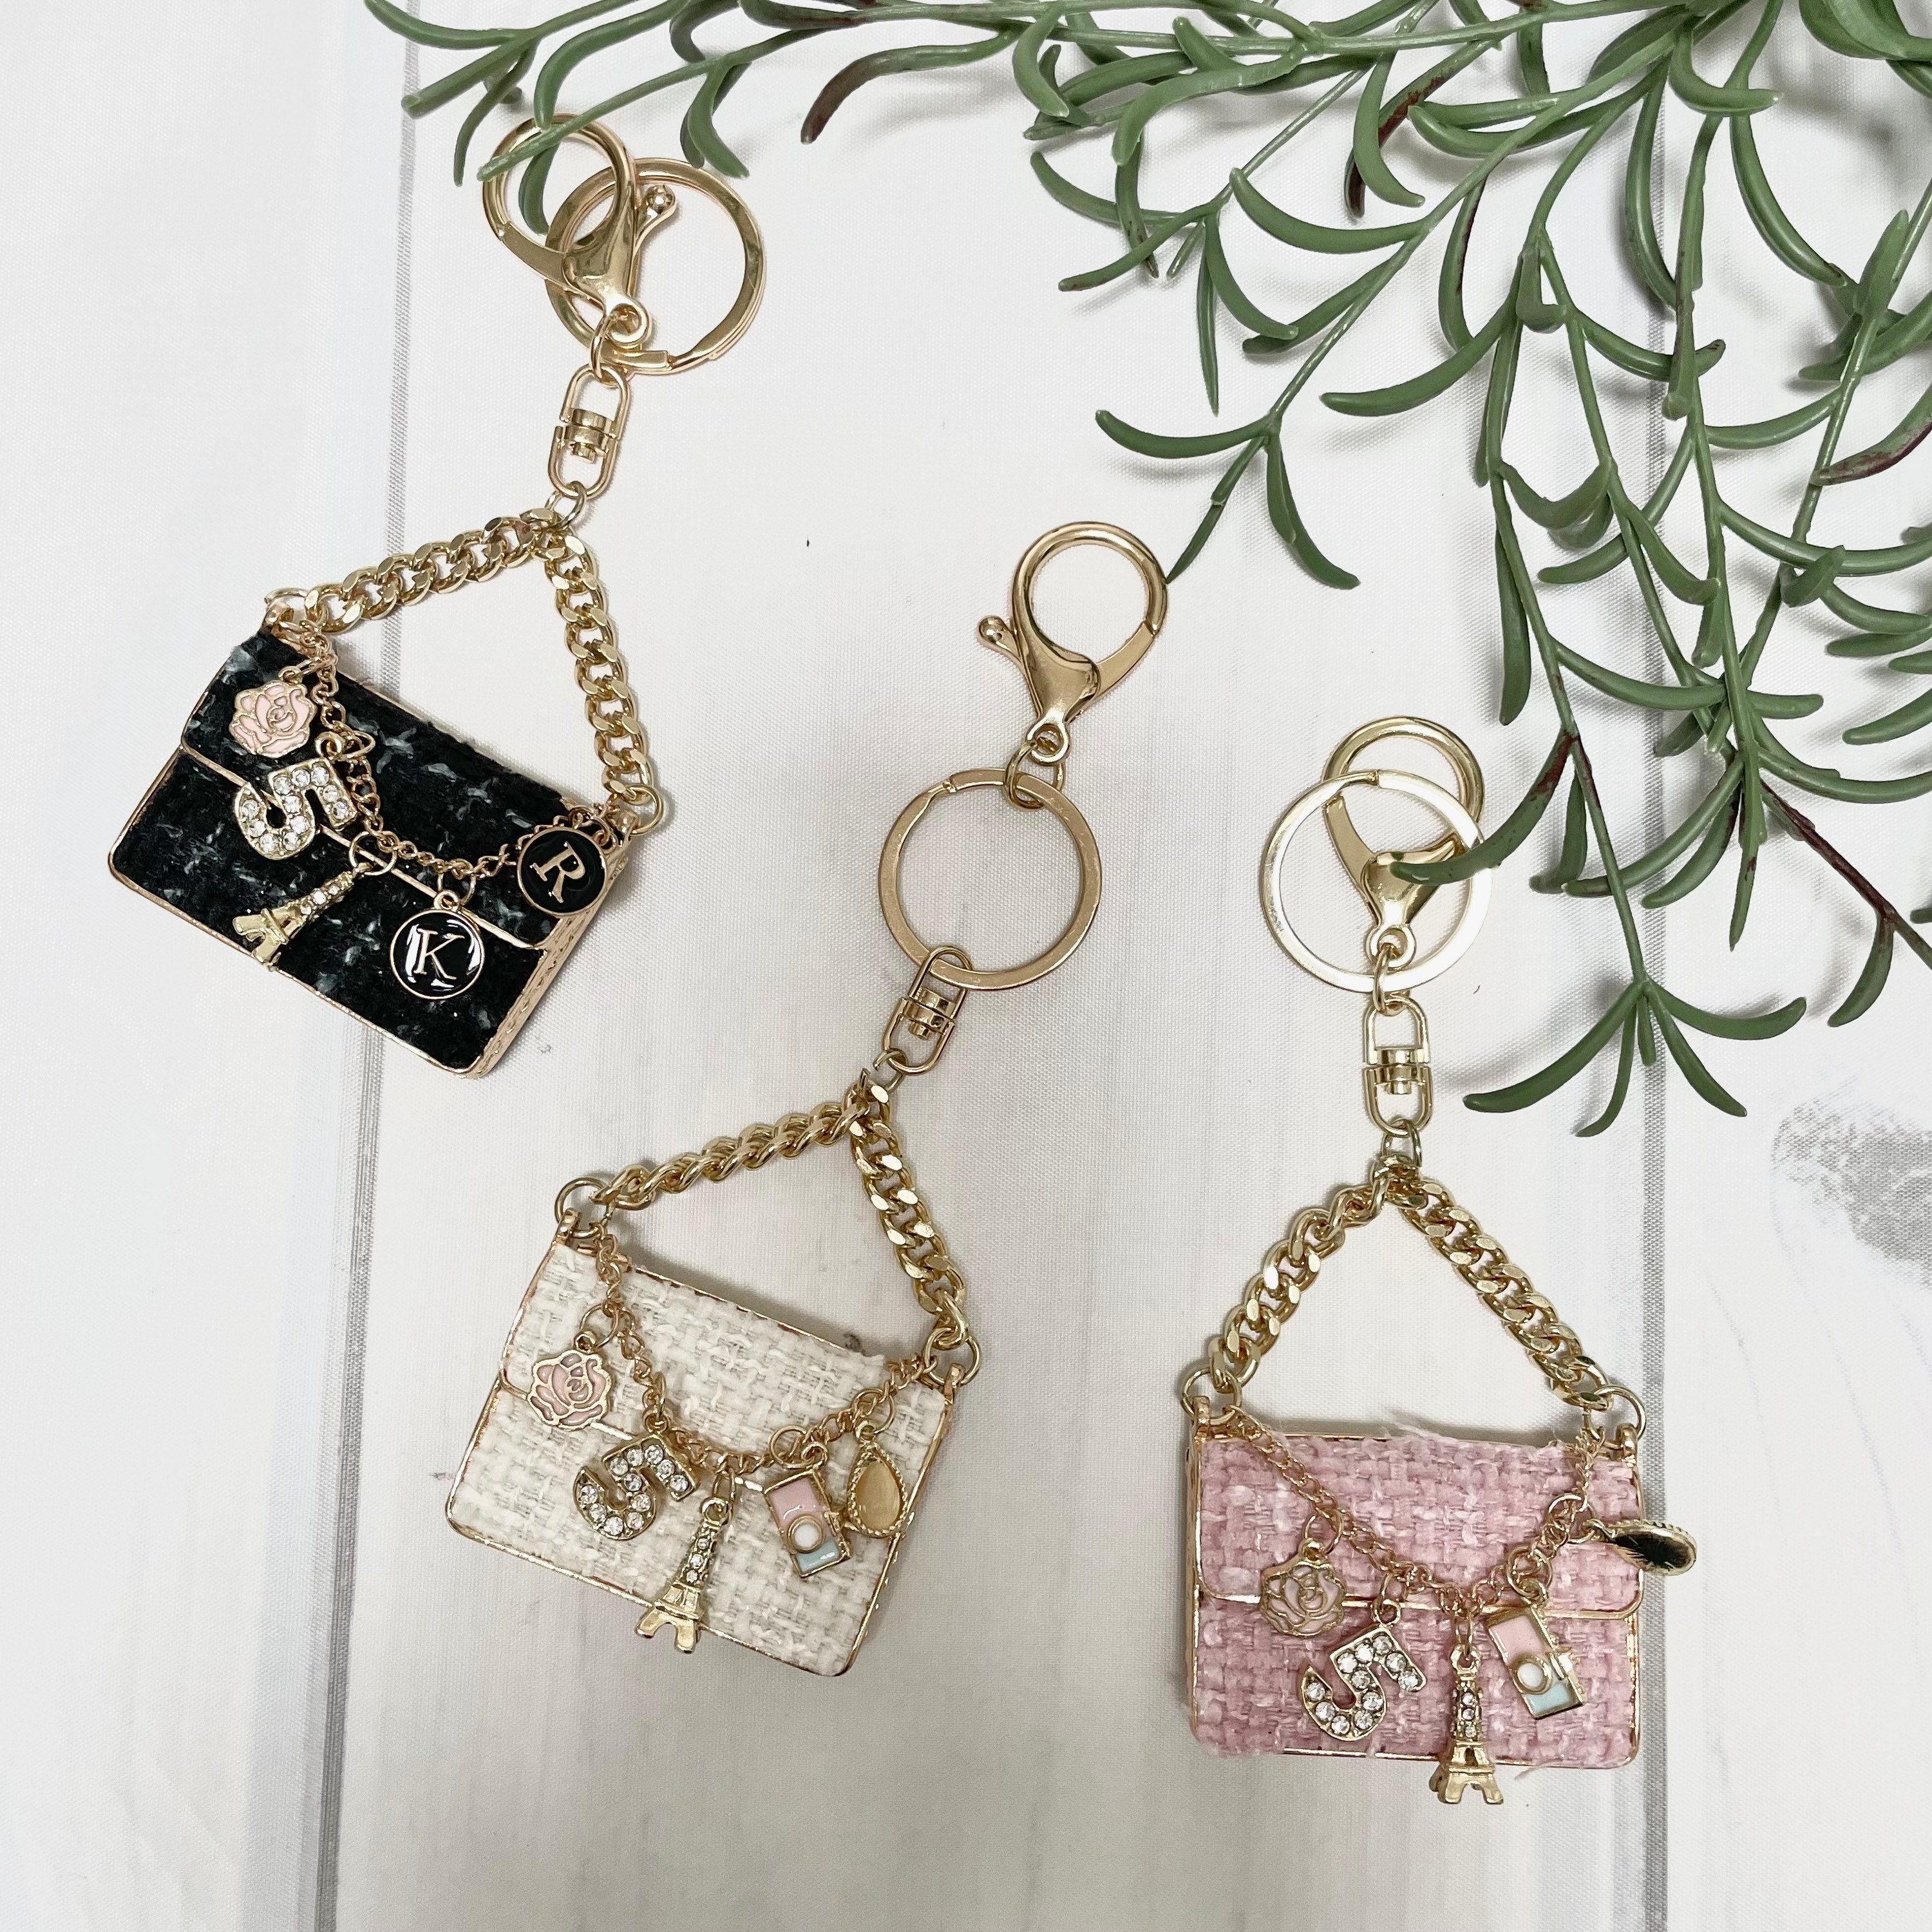 Shop Louis Vuitton MONOGRAM Dragonne bag charm & key holder by 1peace